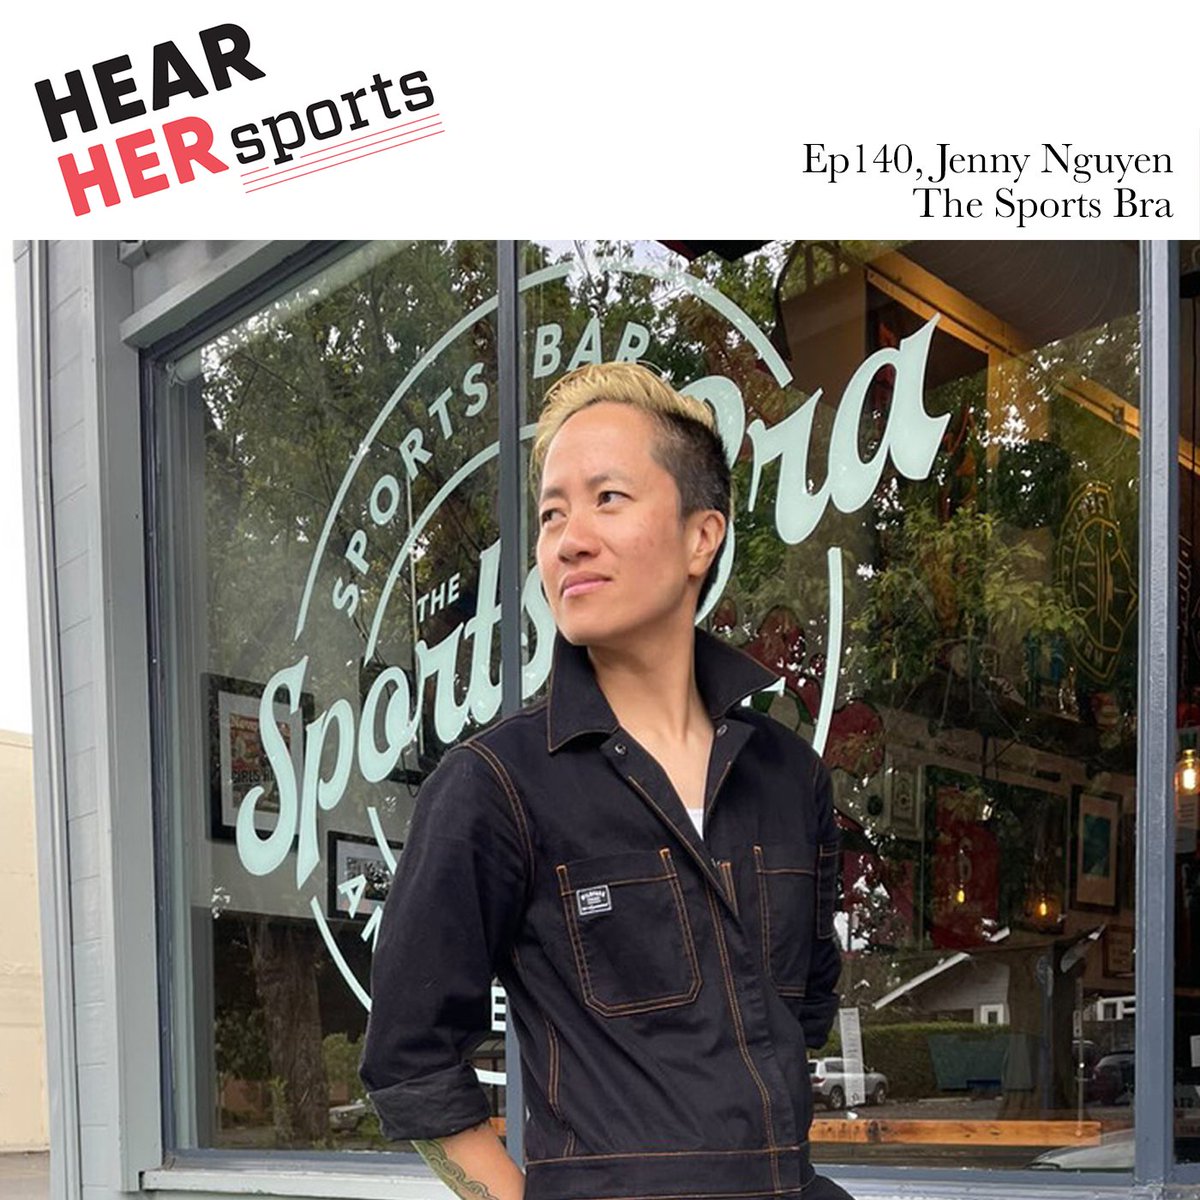 RT @HearHerSports: Fantastic new ep is out! Hear from @TheSportsBraPDX founder Jenny Nguyen.
https://t.co/VYul1cllQl https://t.co/4Z77kIBg1L